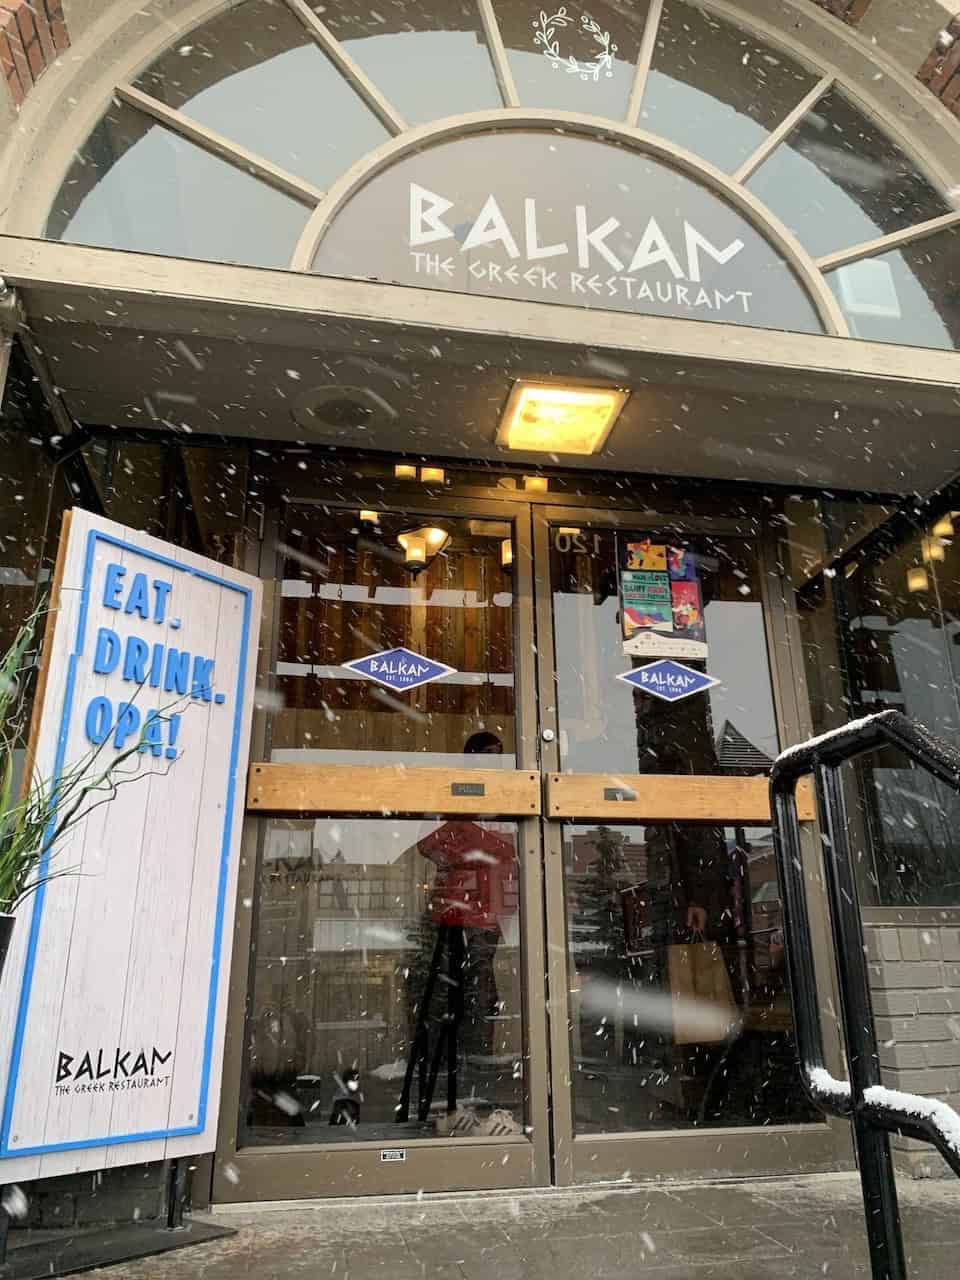 Balkan Restaurant Banff Alberta Canada - Located in downtown Banff, Balkan The Greek Restaurant is a friendly, local establishment showcasing the best in Greek hospitality in Alberta Canada.